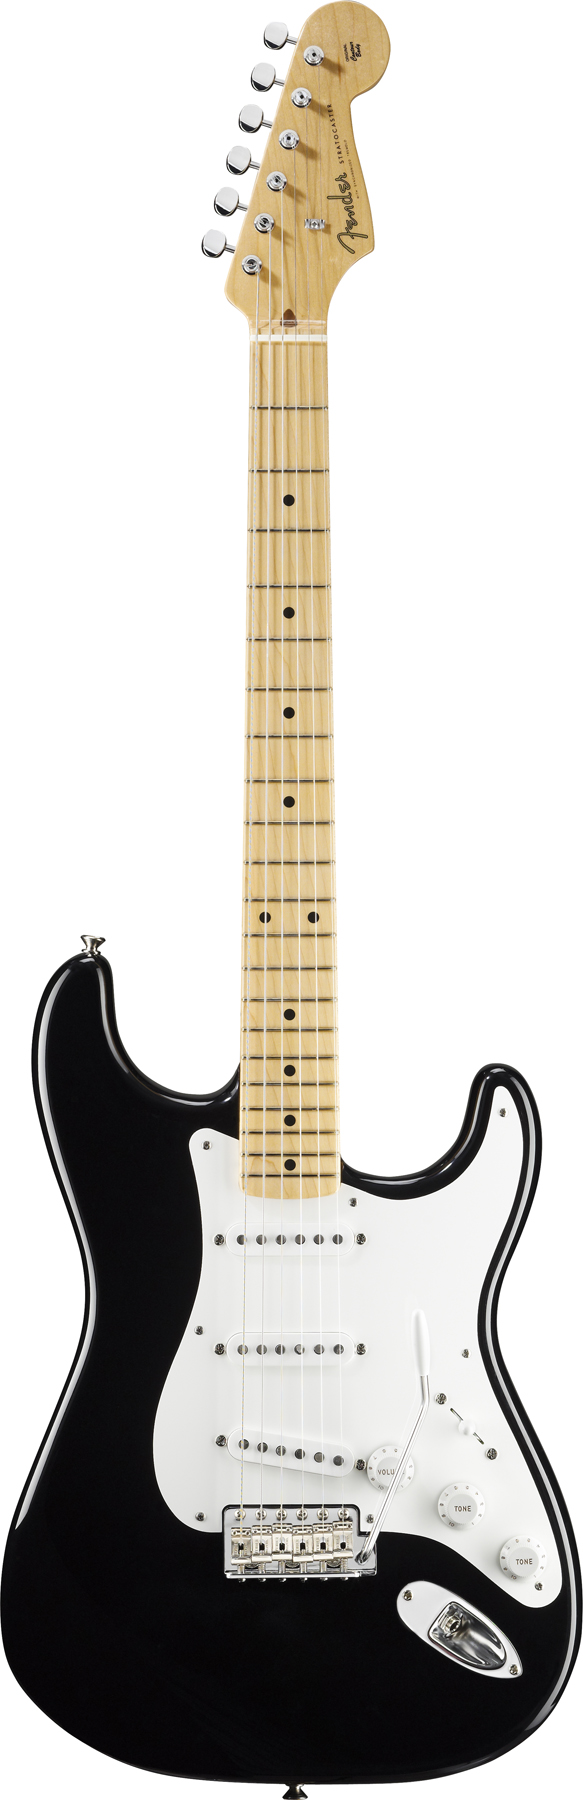 American Vintage 56 Stratocaster